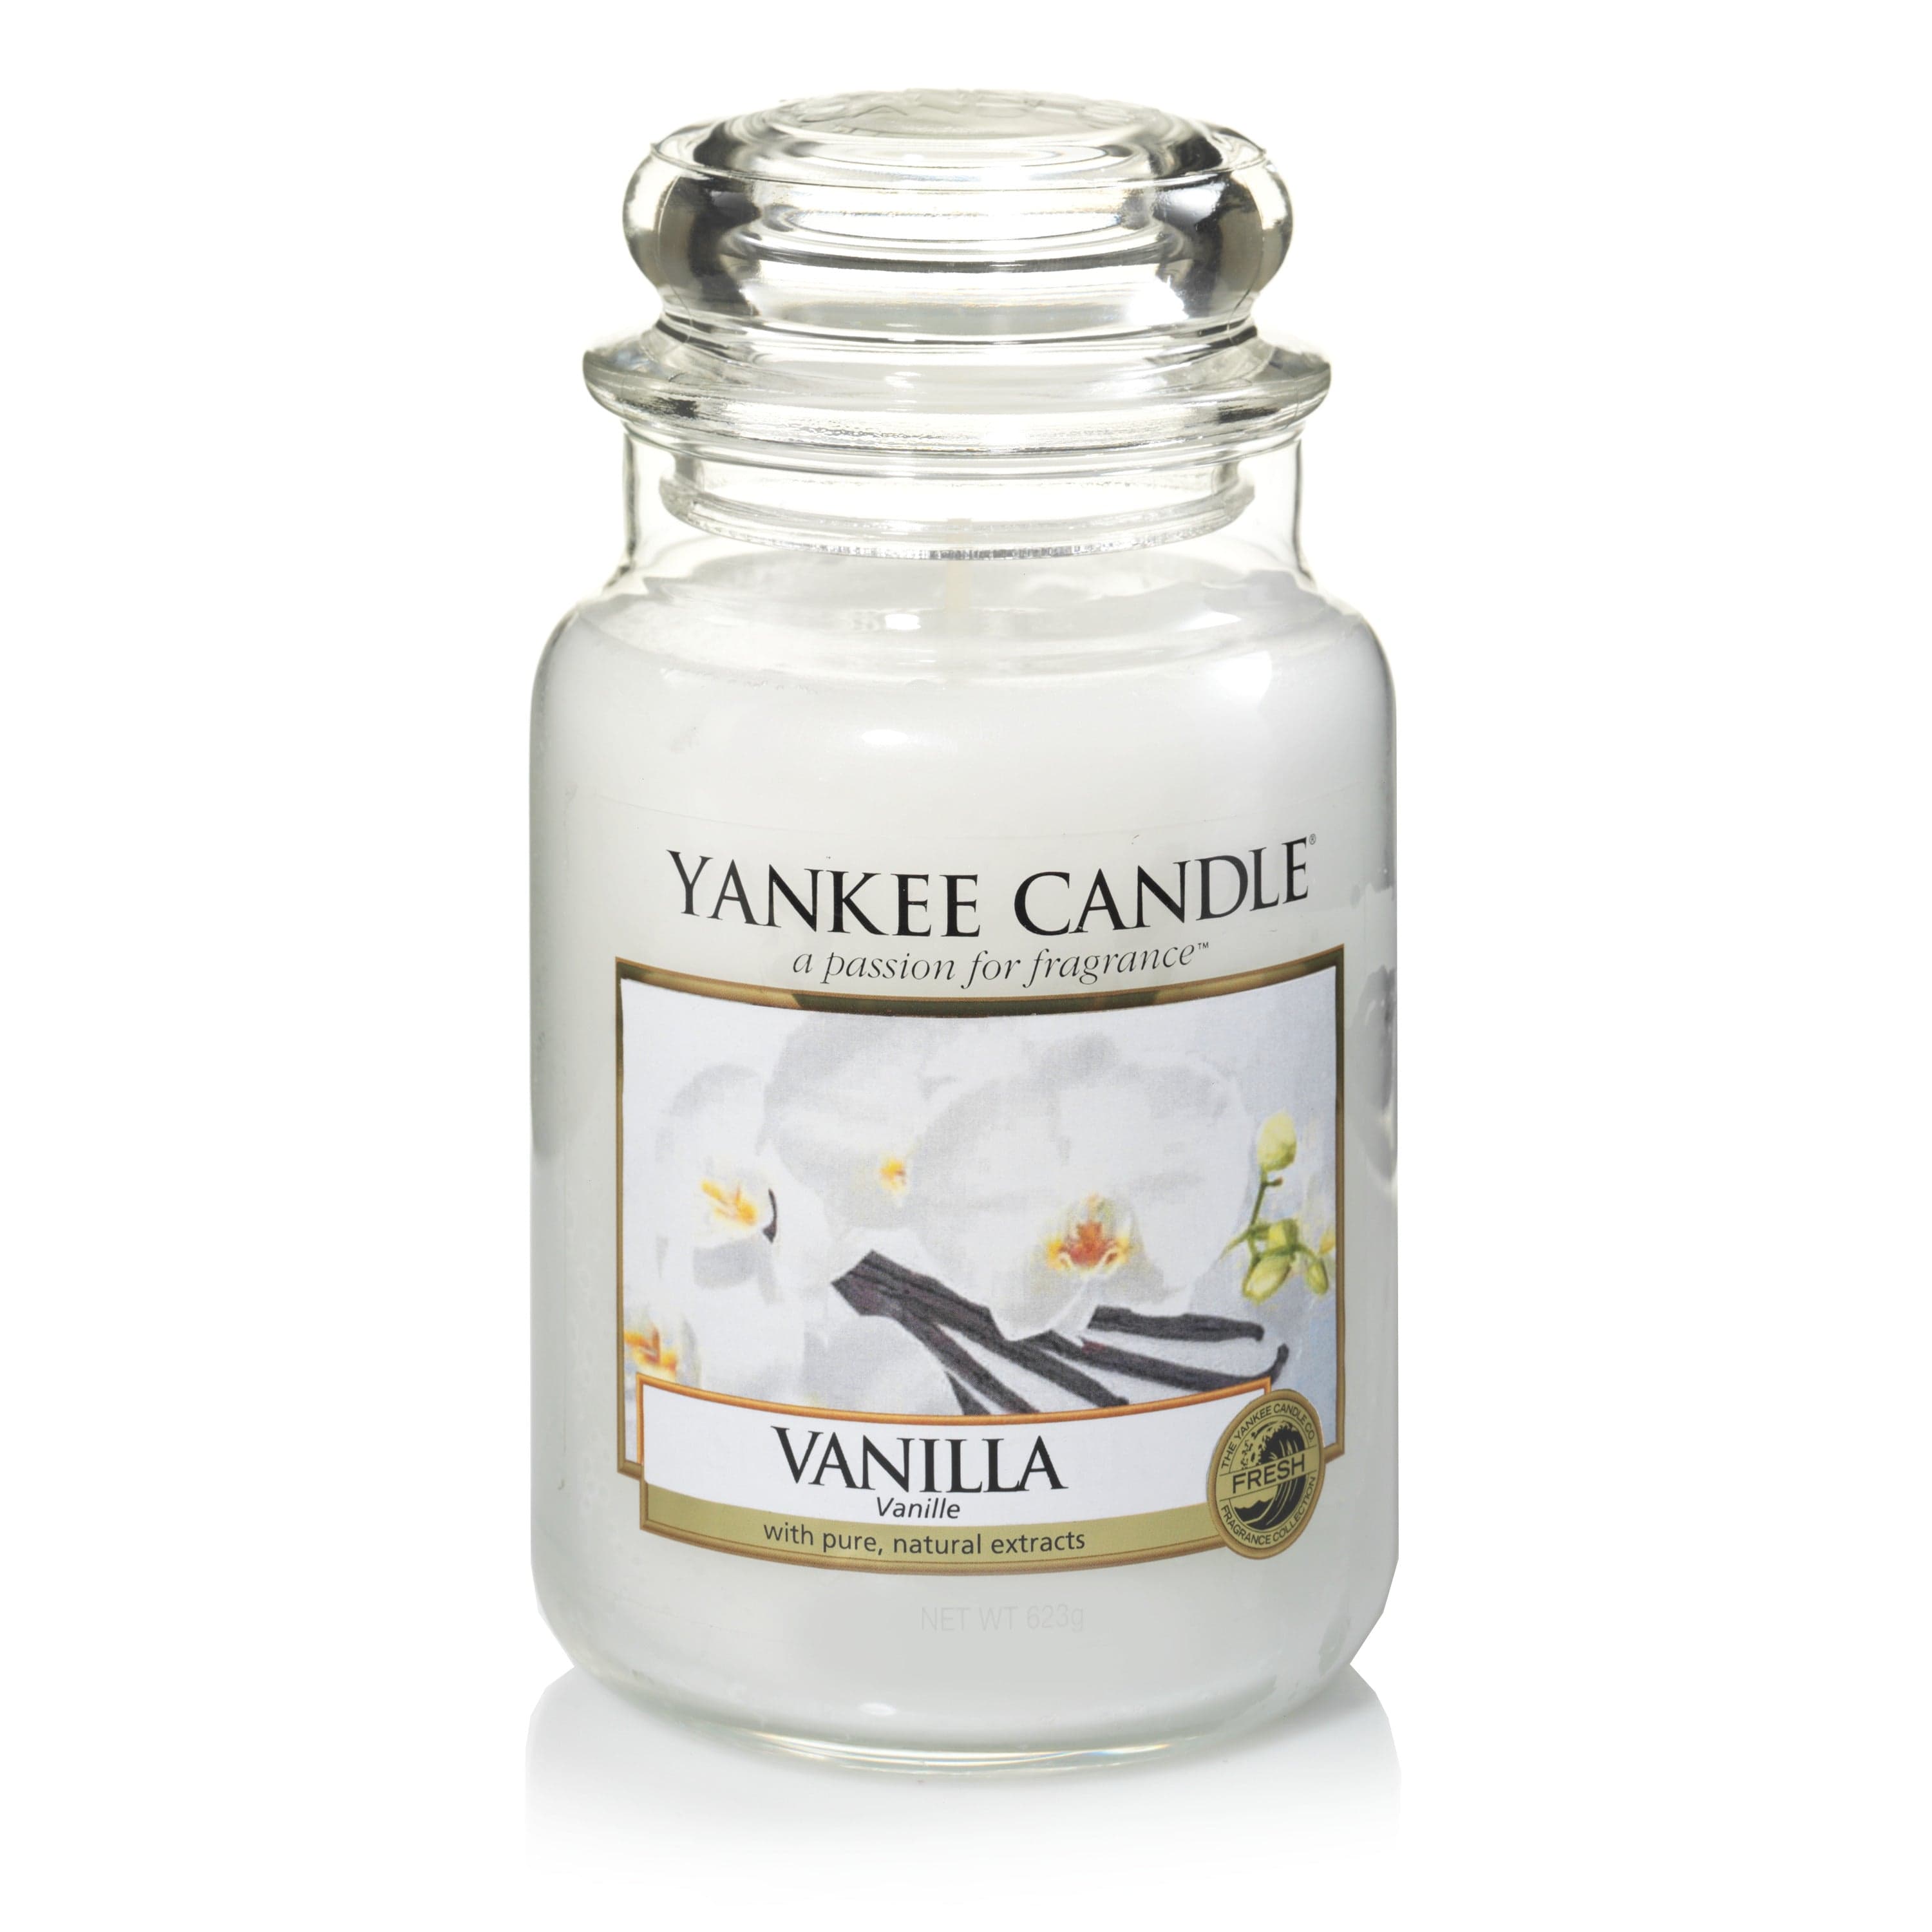 Yankee Candle Large Jar Candle Yankee Candle Large Jar - Vanilla